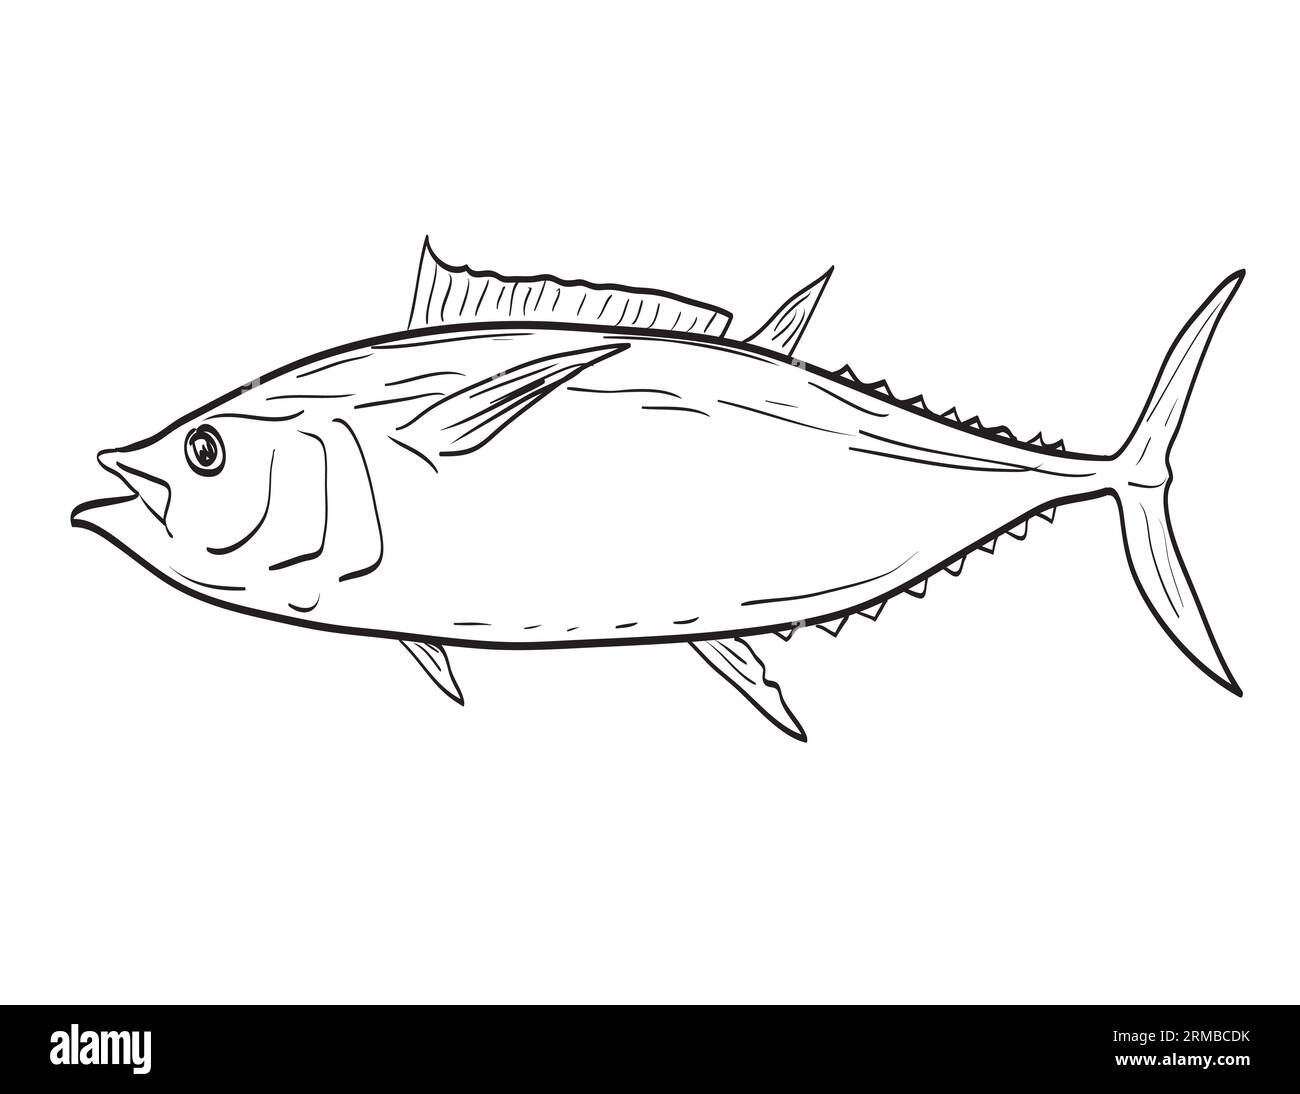 Drawing sketch style illustration of an Atlantic Bigeye Tuna or Thunnus ...